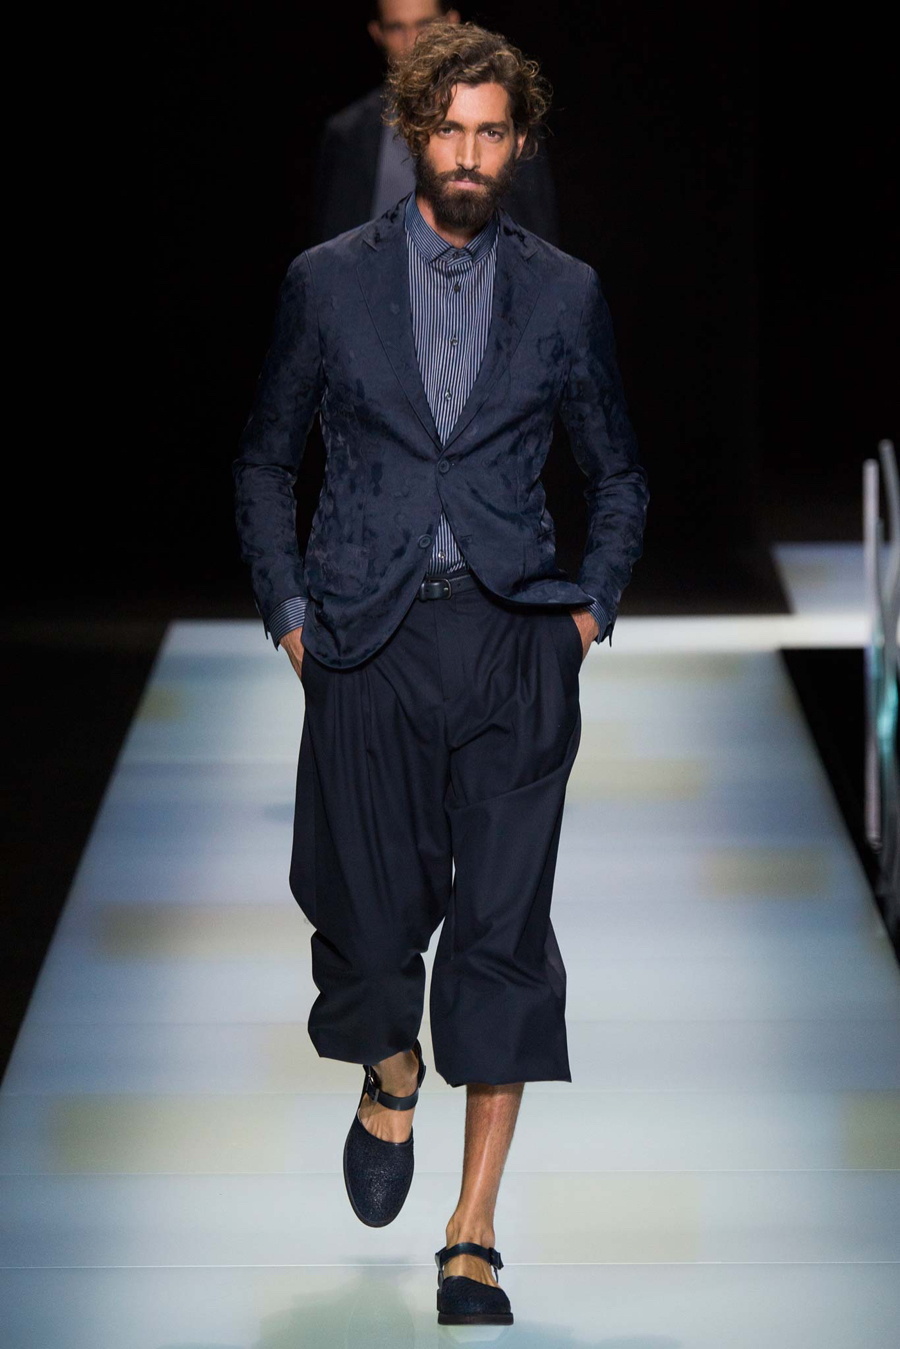 Giorgio Armani Spring Summer 2016 Menswear Collection Milan Fashion Week 050